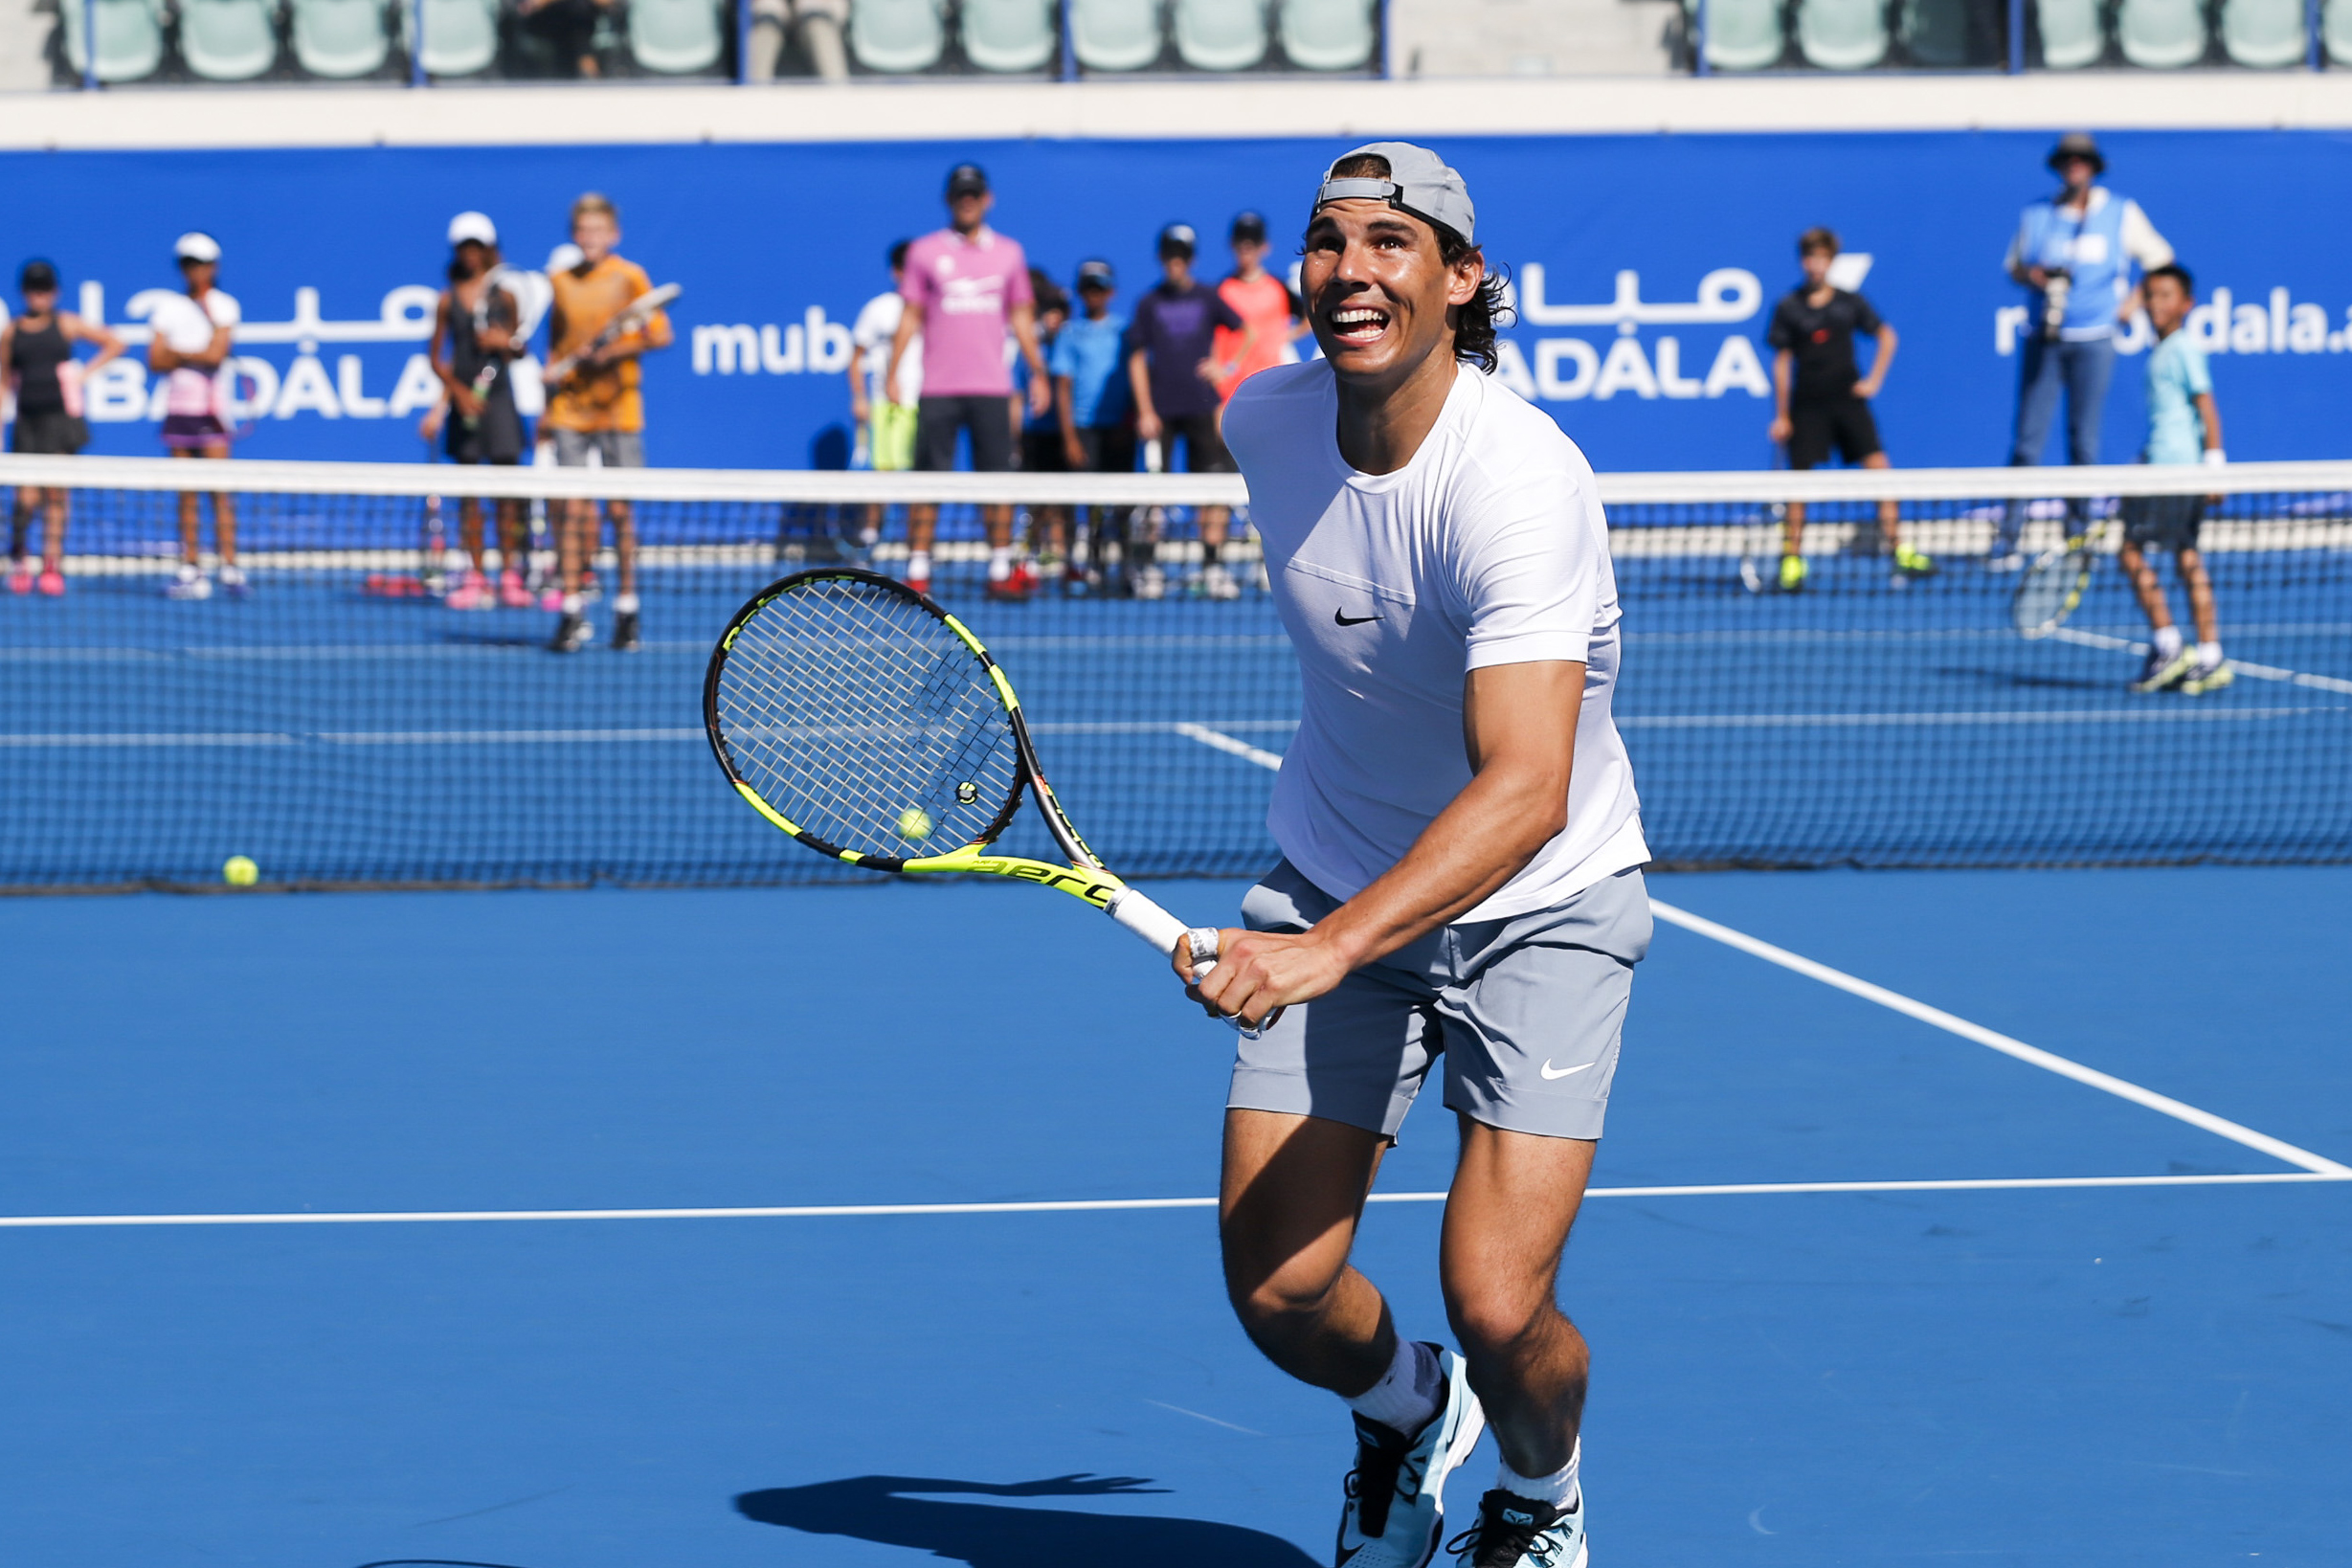 El tenista Rafa Nadal abrirá la próxima temporada en Abu Dhabi